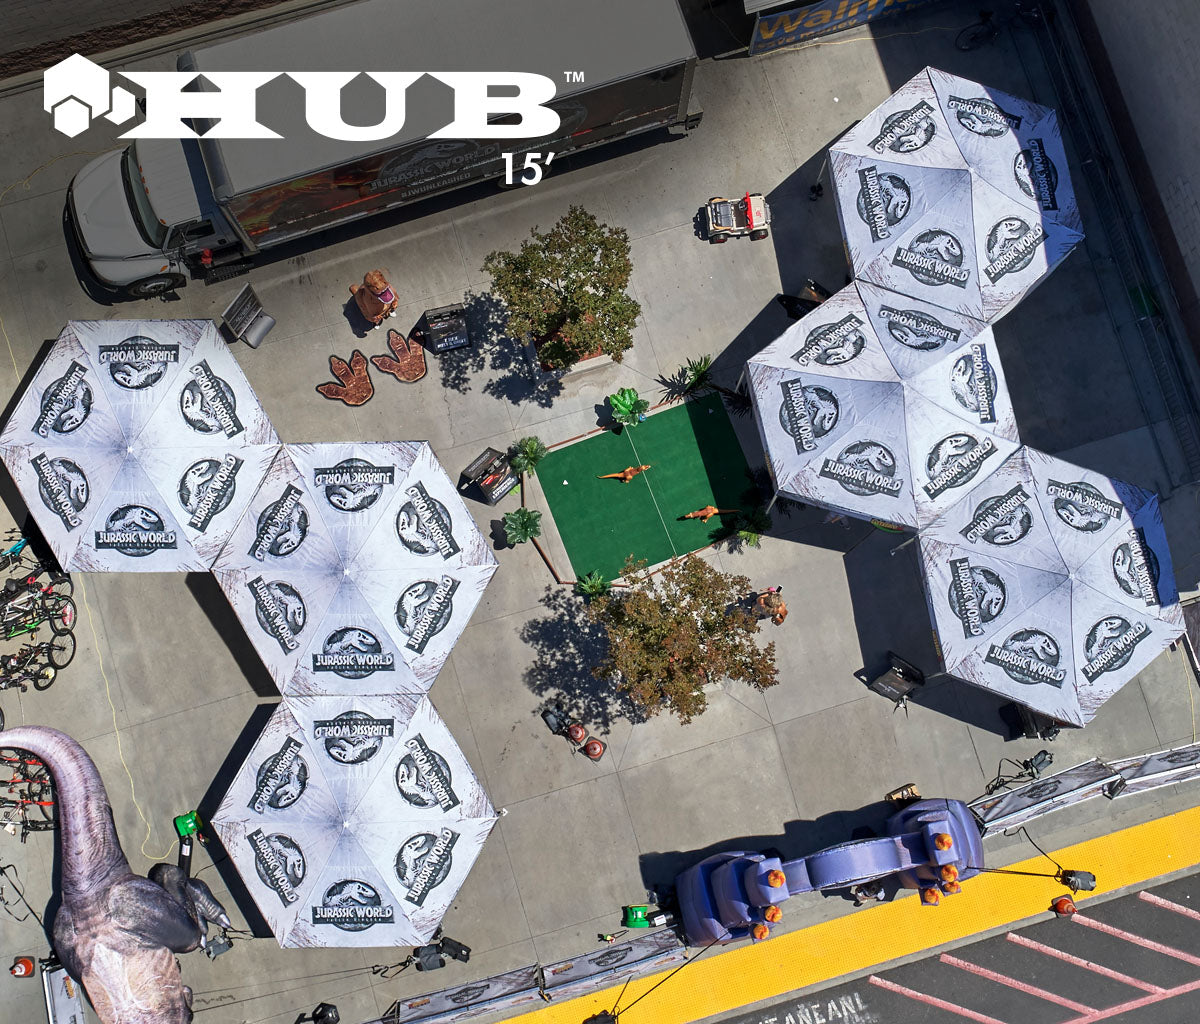 Hub™ 15' x 15' Canopy